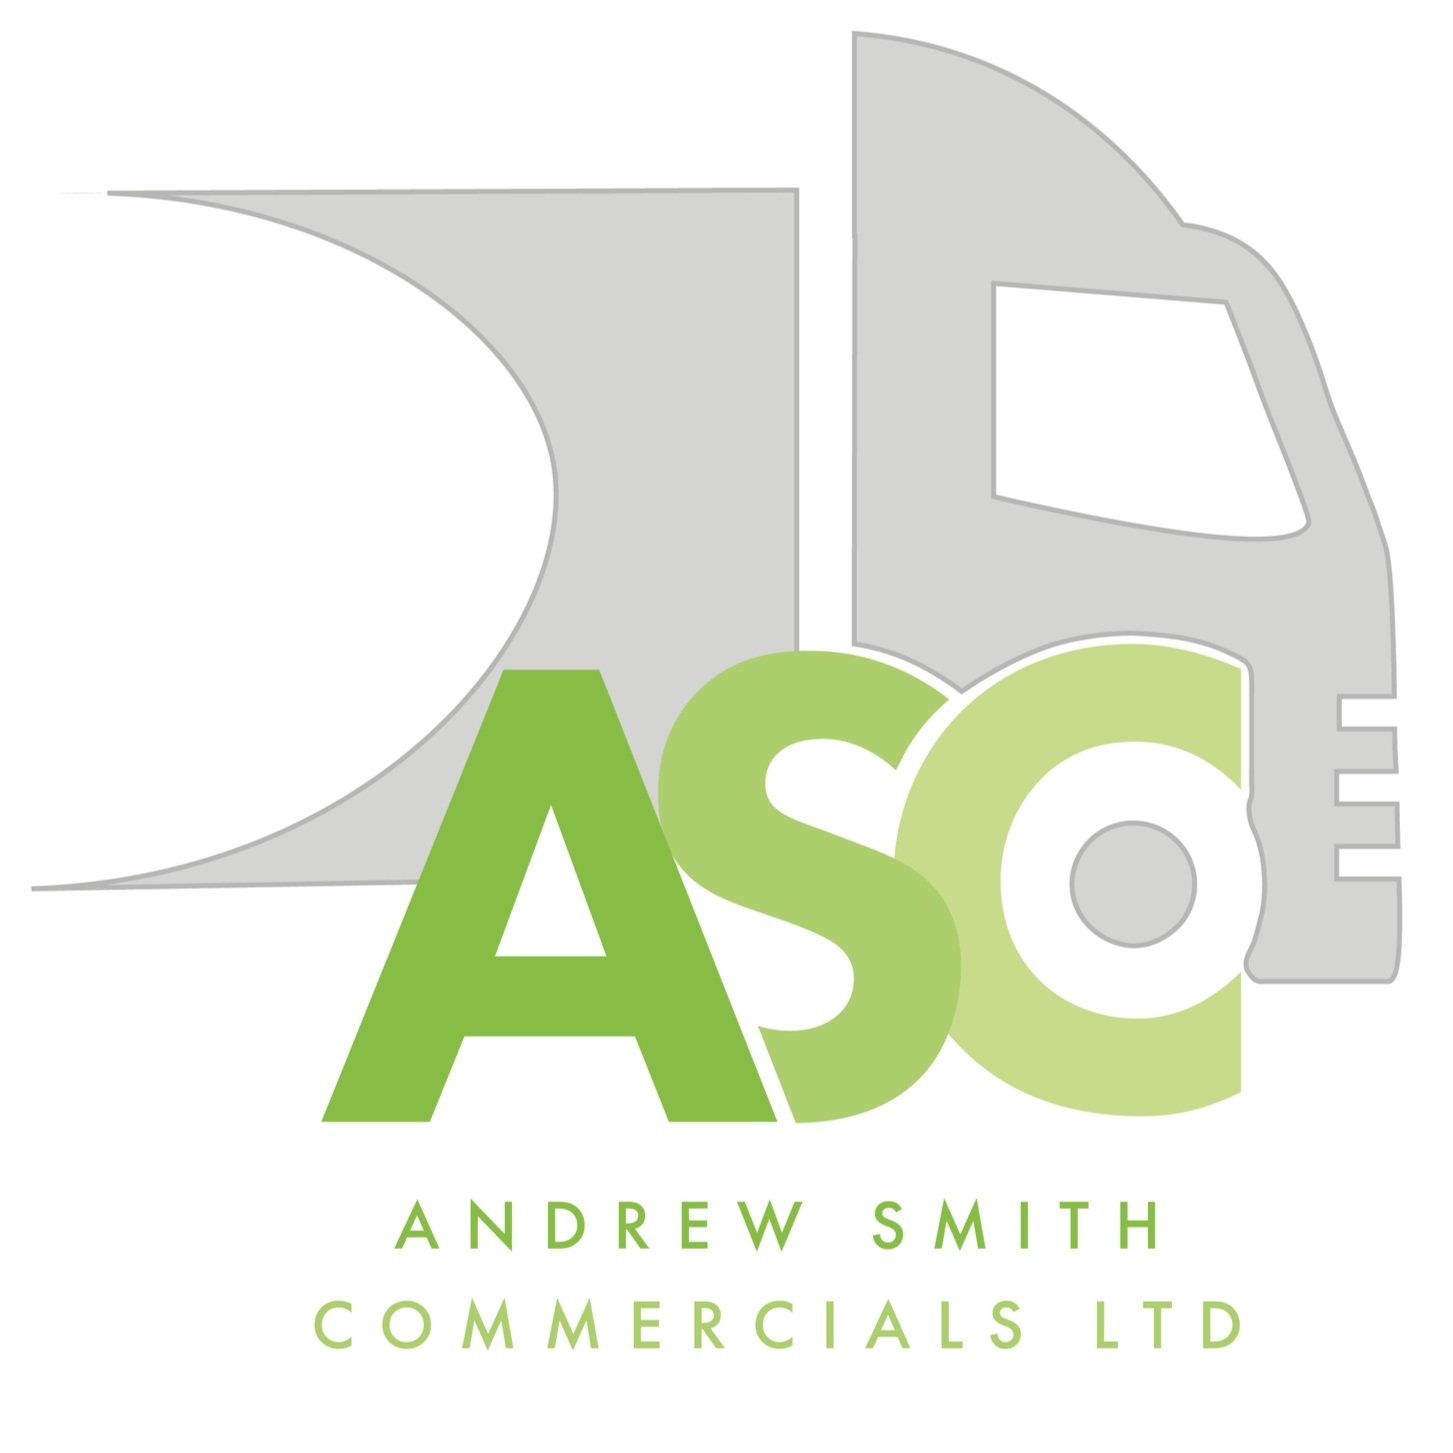 Andrew Smith Commercials Ltd